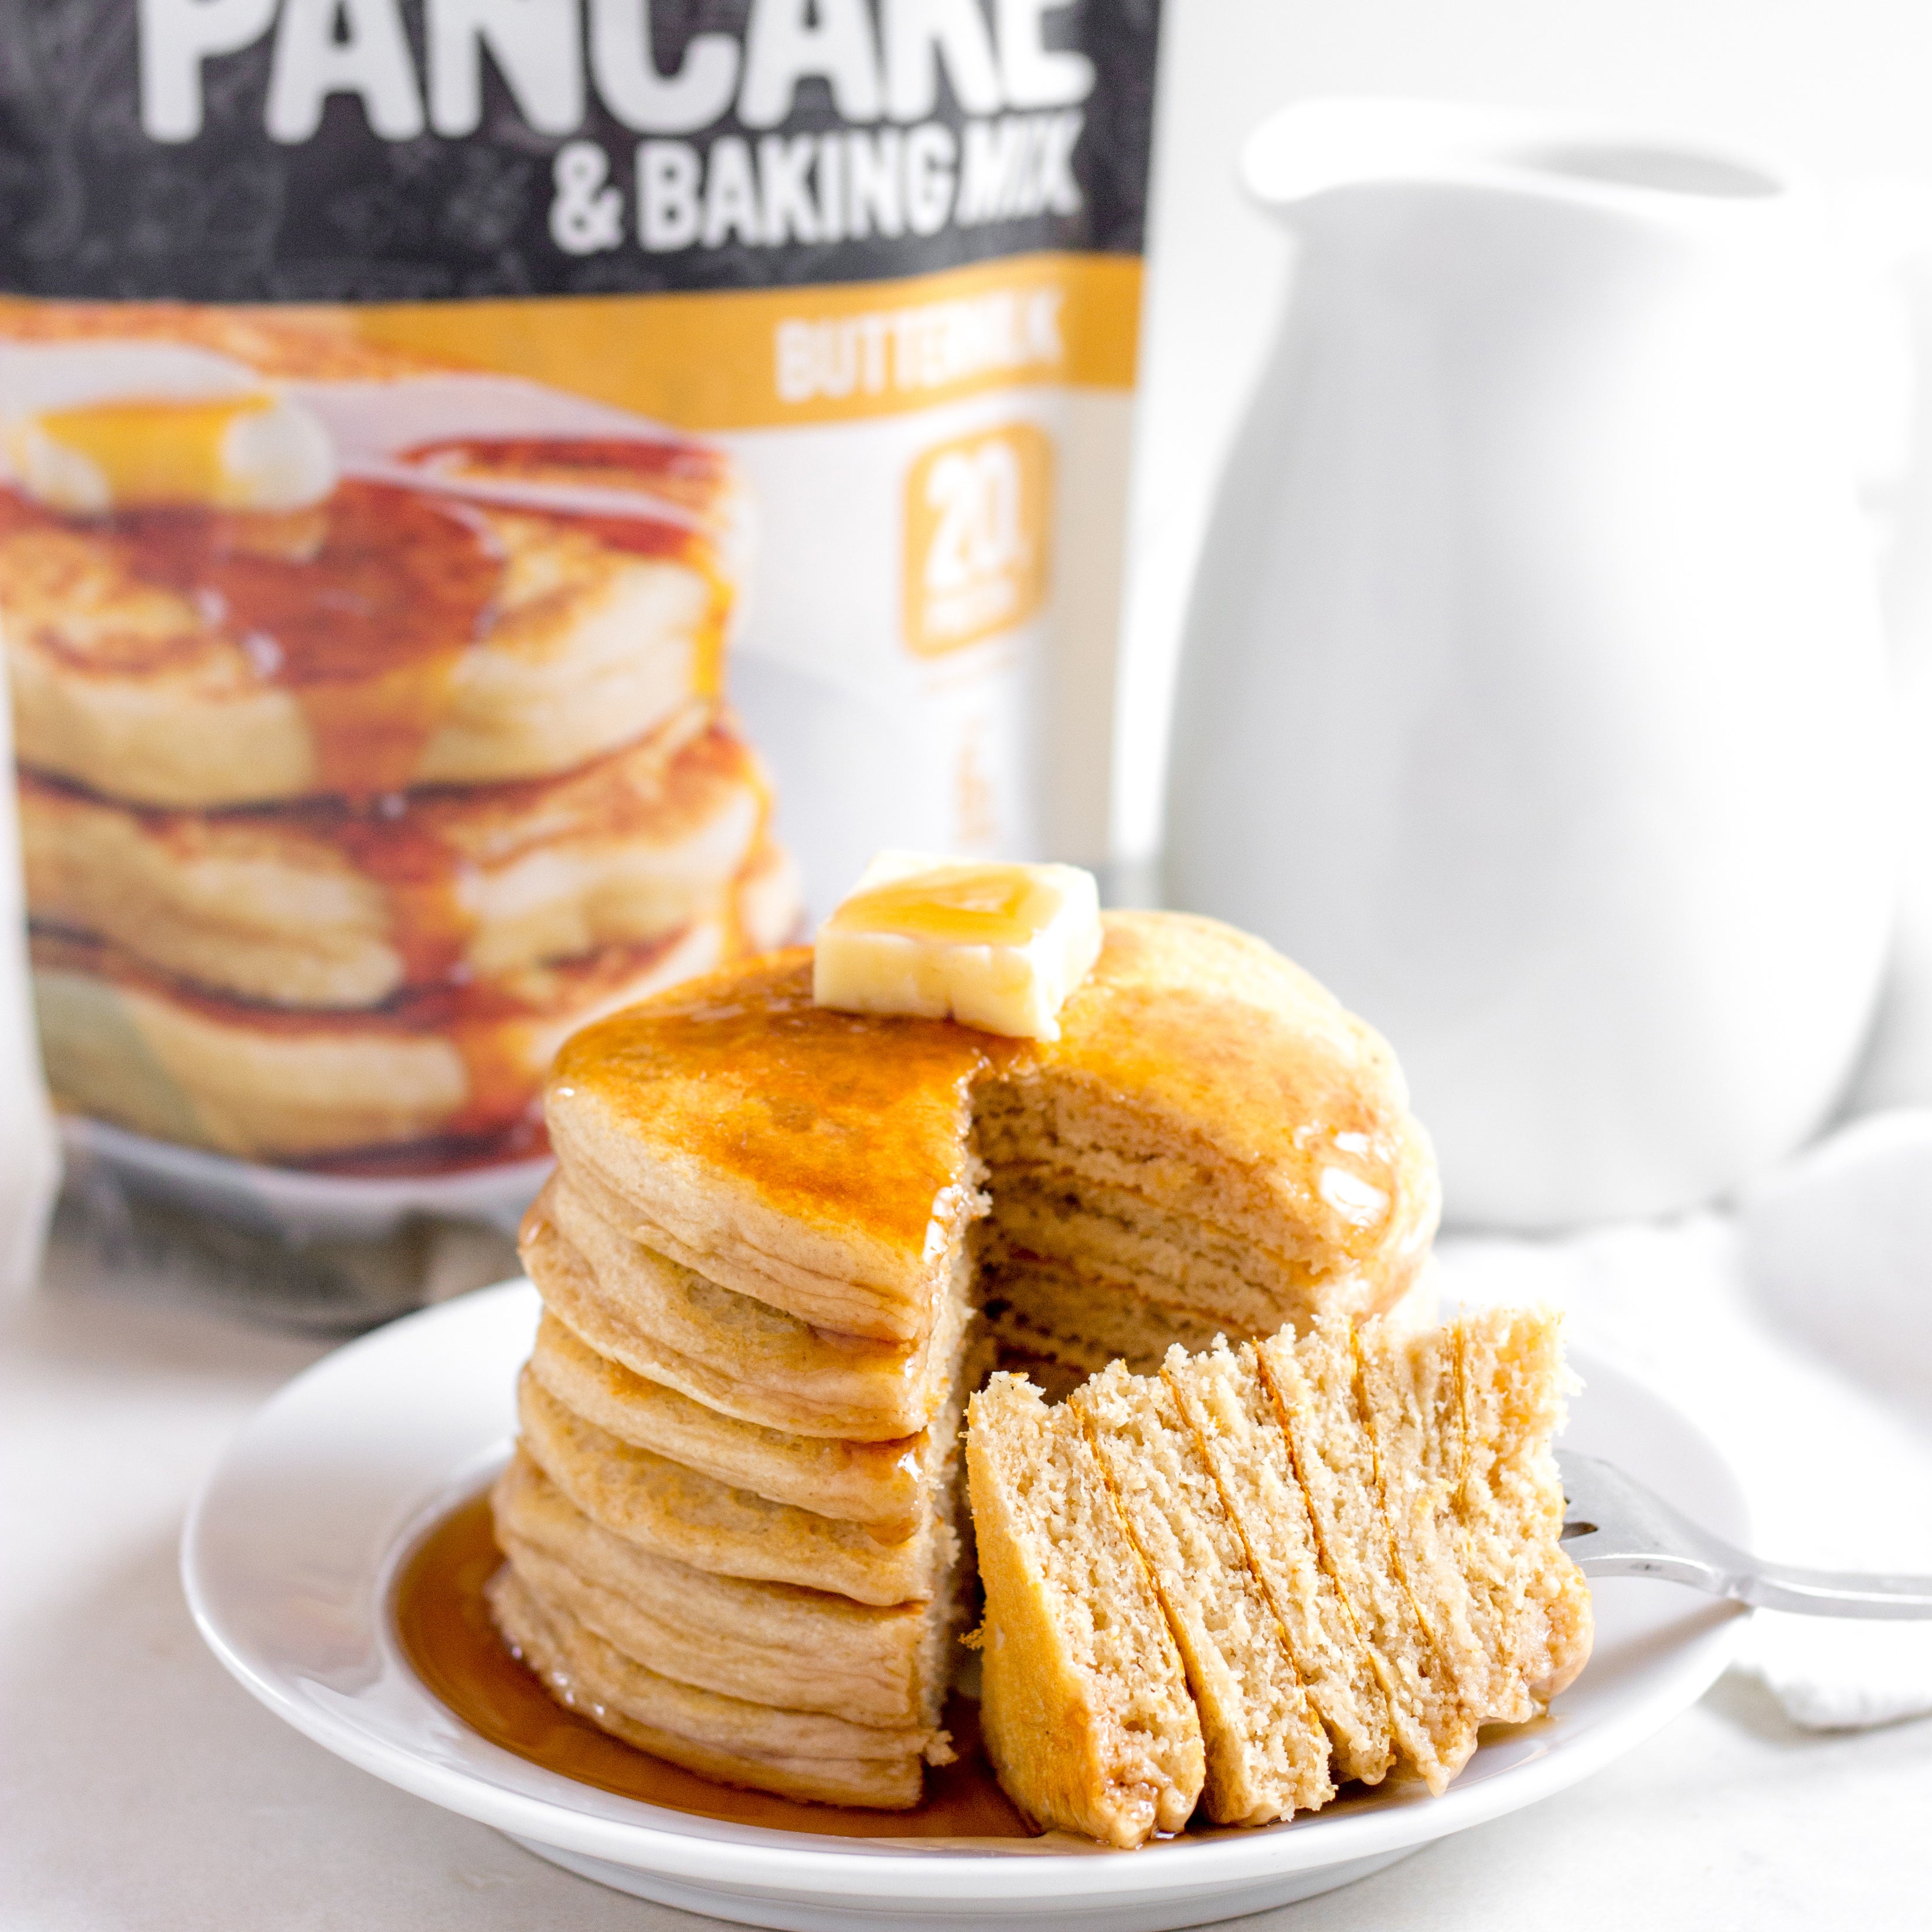 12oz - Buttermilk Protein Pancake & Baking Mix